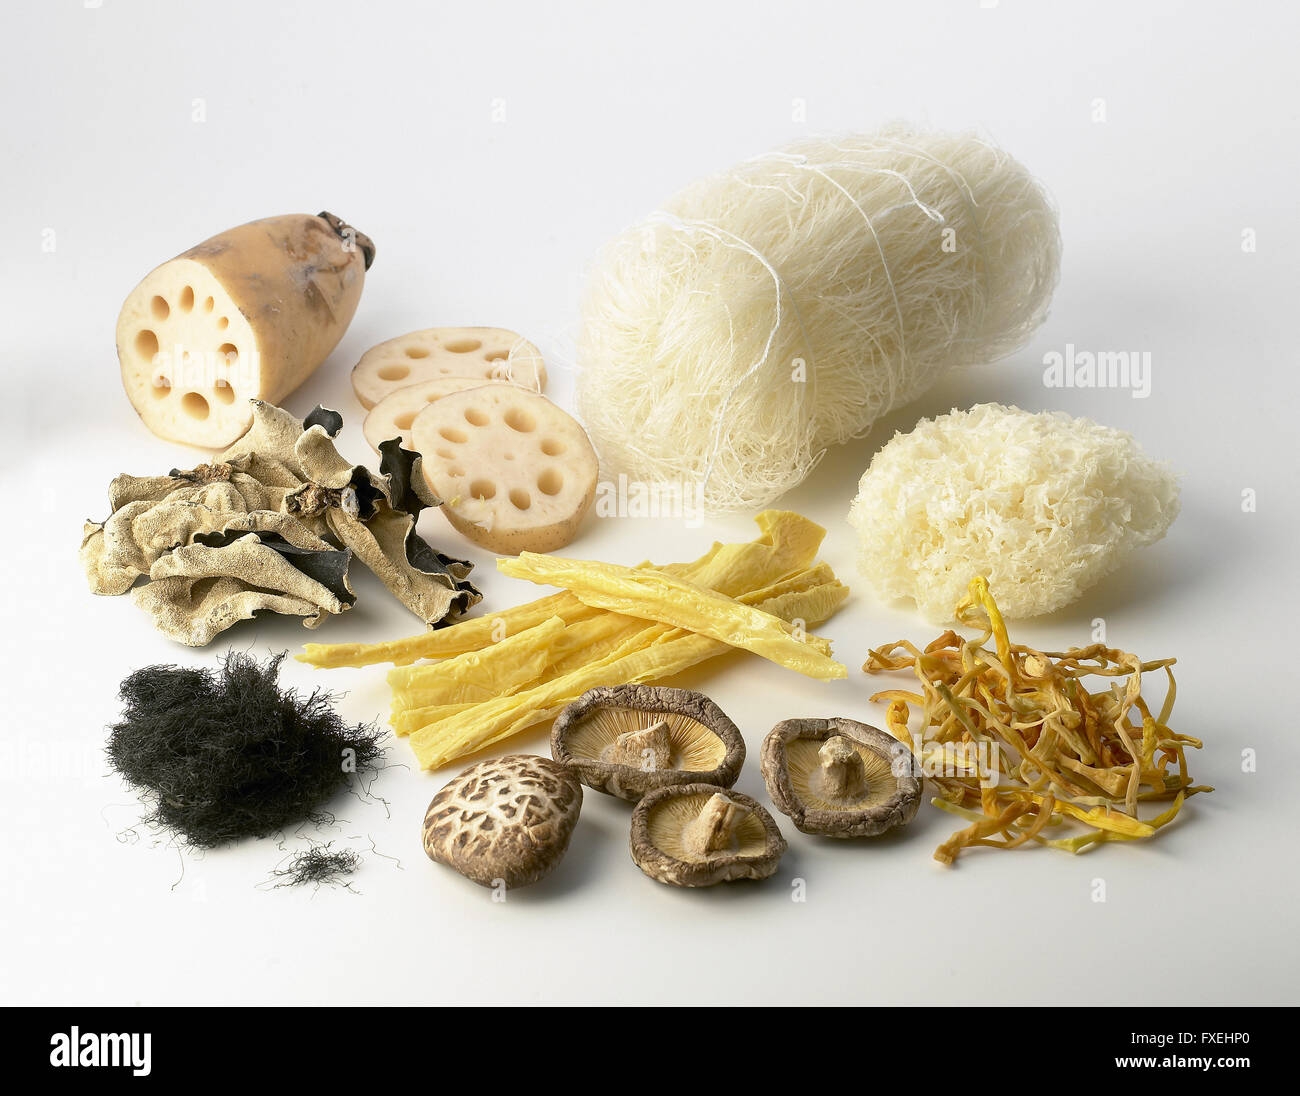 Lotuswurzel, getrockneten Tofu-Haut, feine Bohnen Nudeln, schwarze Pilz, Haar Moos, Tiger Lilienknospen, weißen Pilz, schwarze Pilz und shiitake Stockfoto